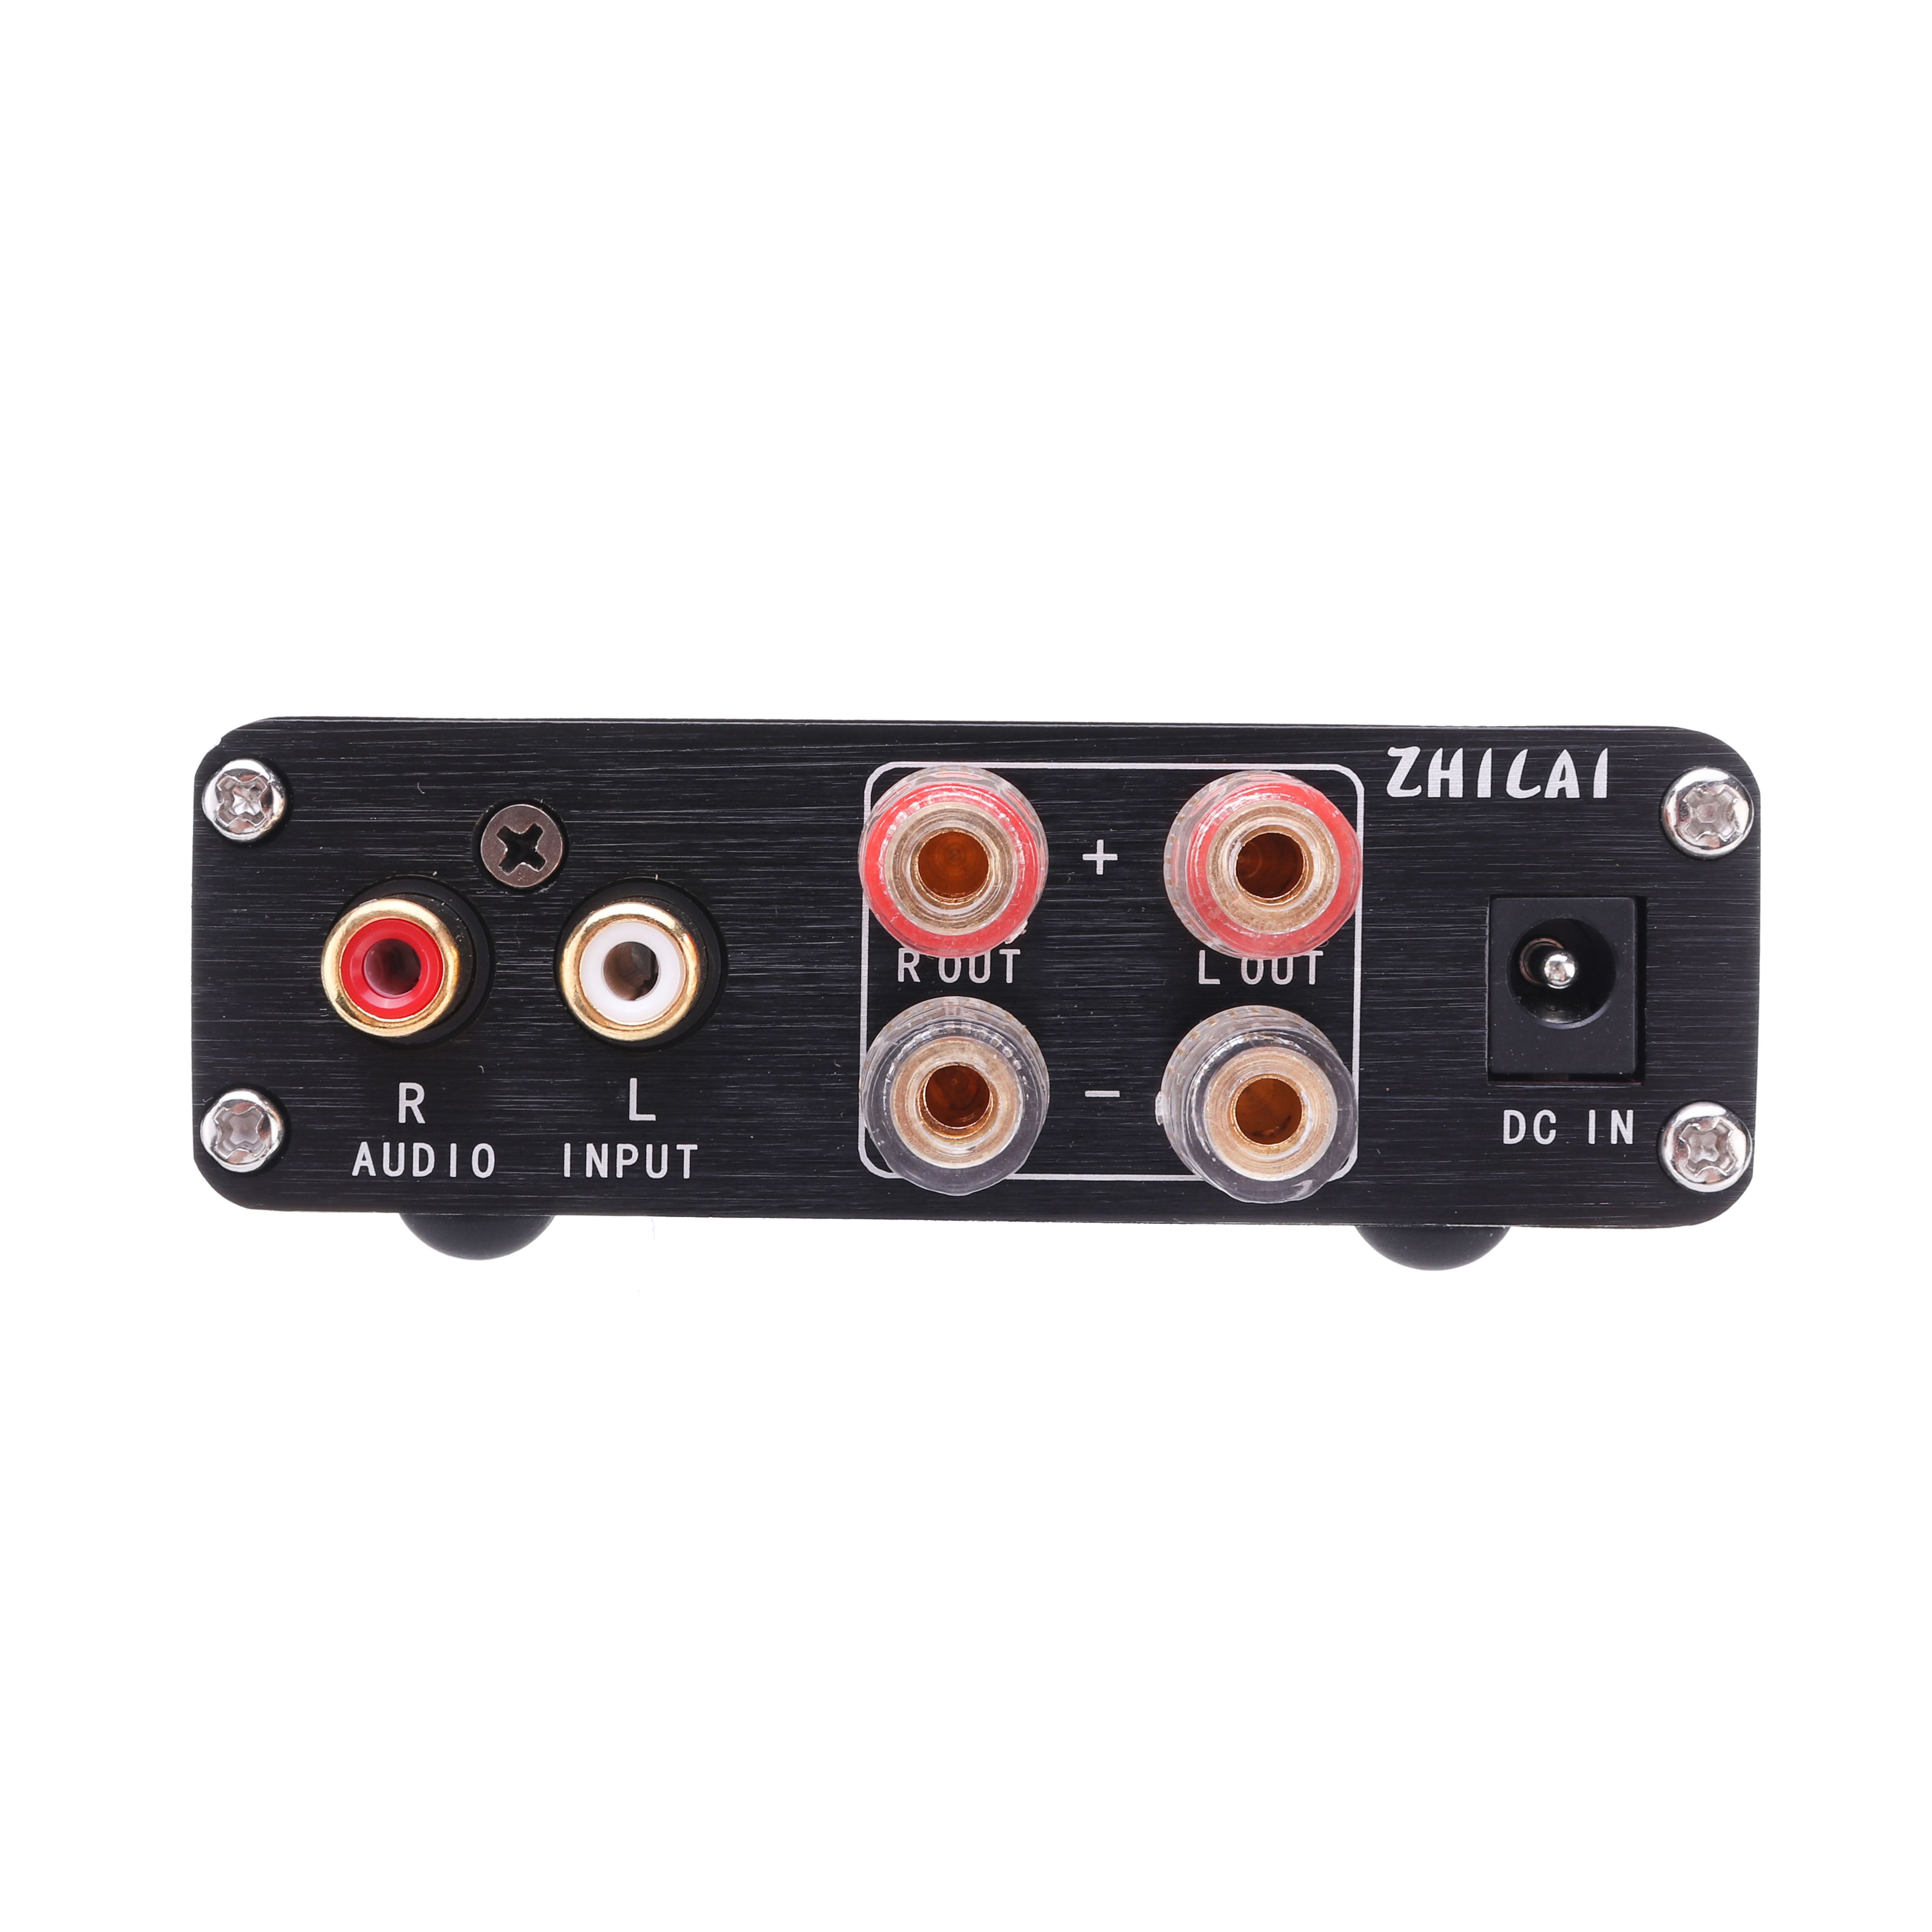 PJMIAOLAI-K4-TDA7498-2x70W-2CH-HIFI-Headphone-Amplifier-1474161